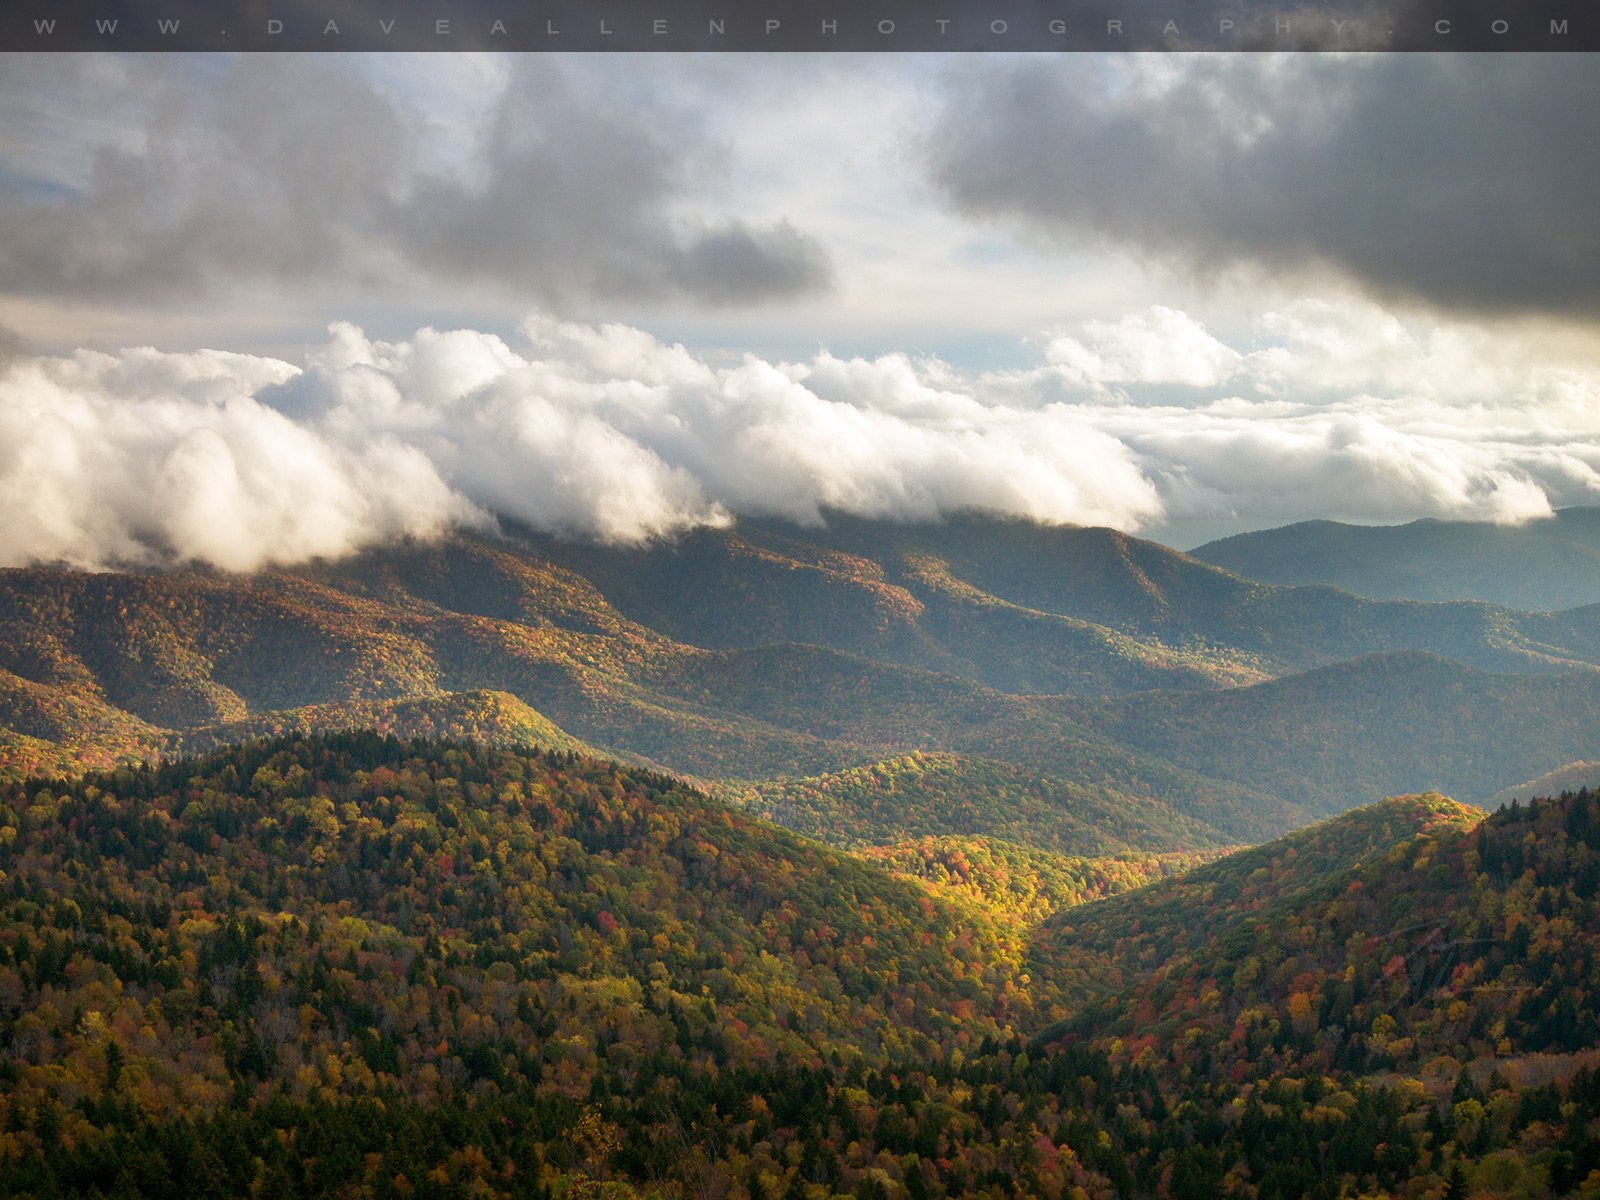 Cowee Mountains Overlook Free Desktop Wallpaper Image